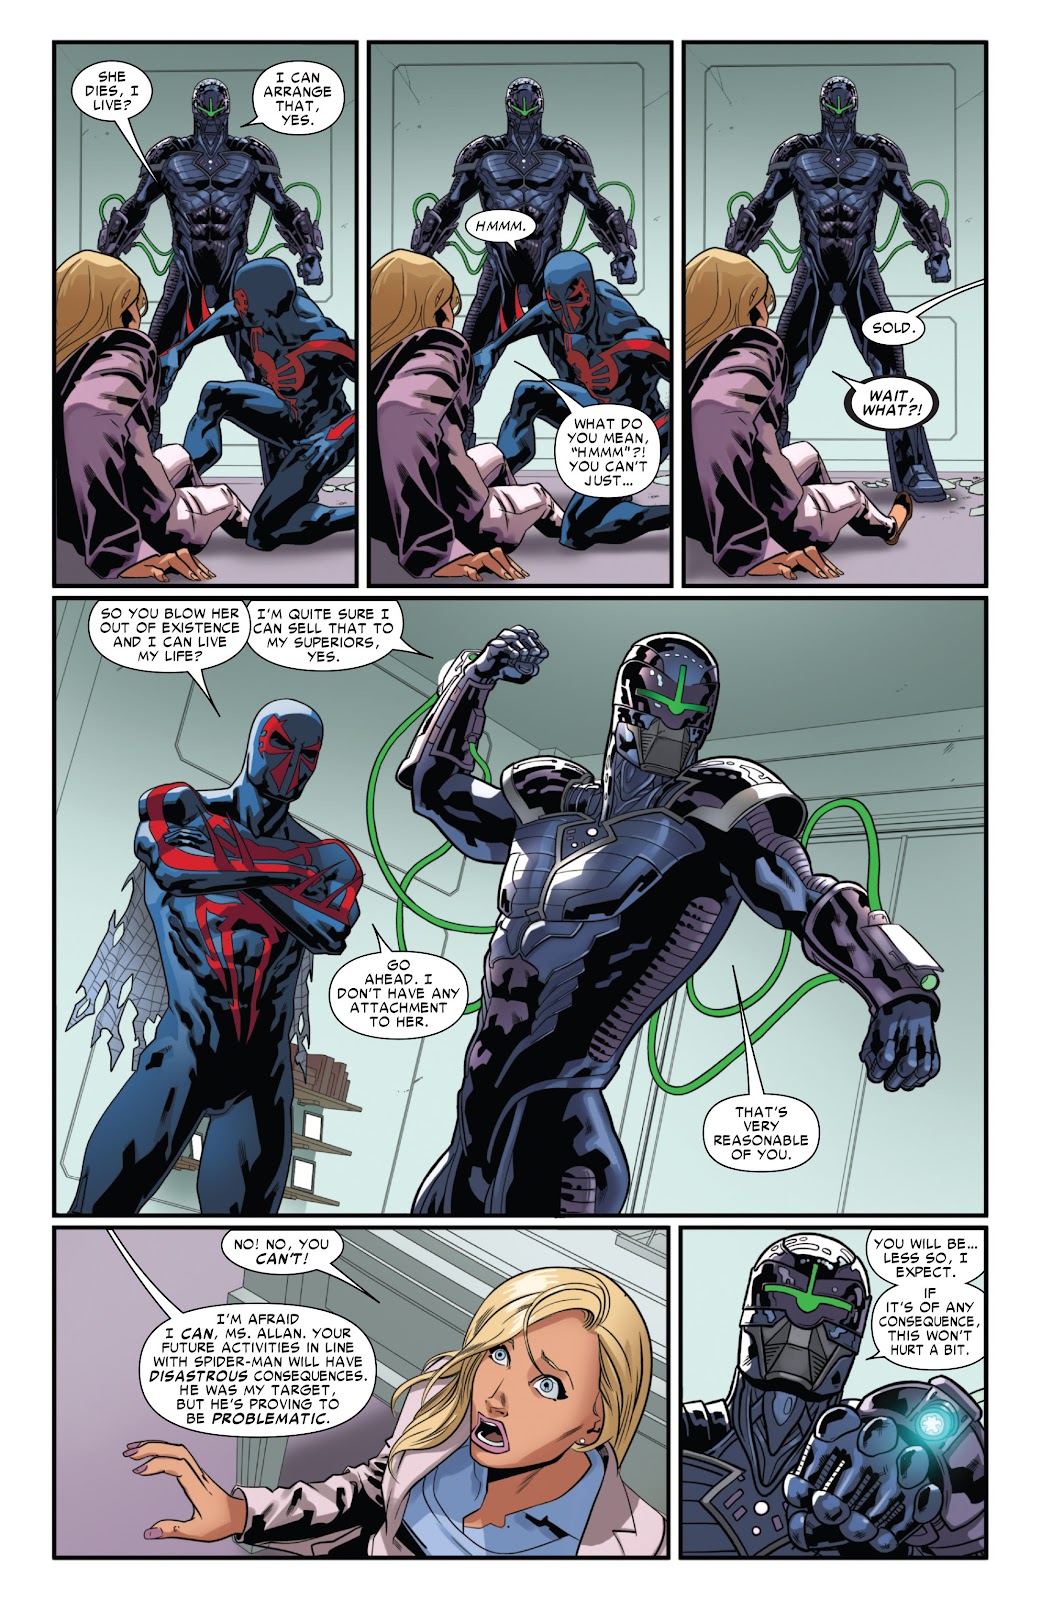 Spider-Man 2099 (2014) issue 1 - Page 19